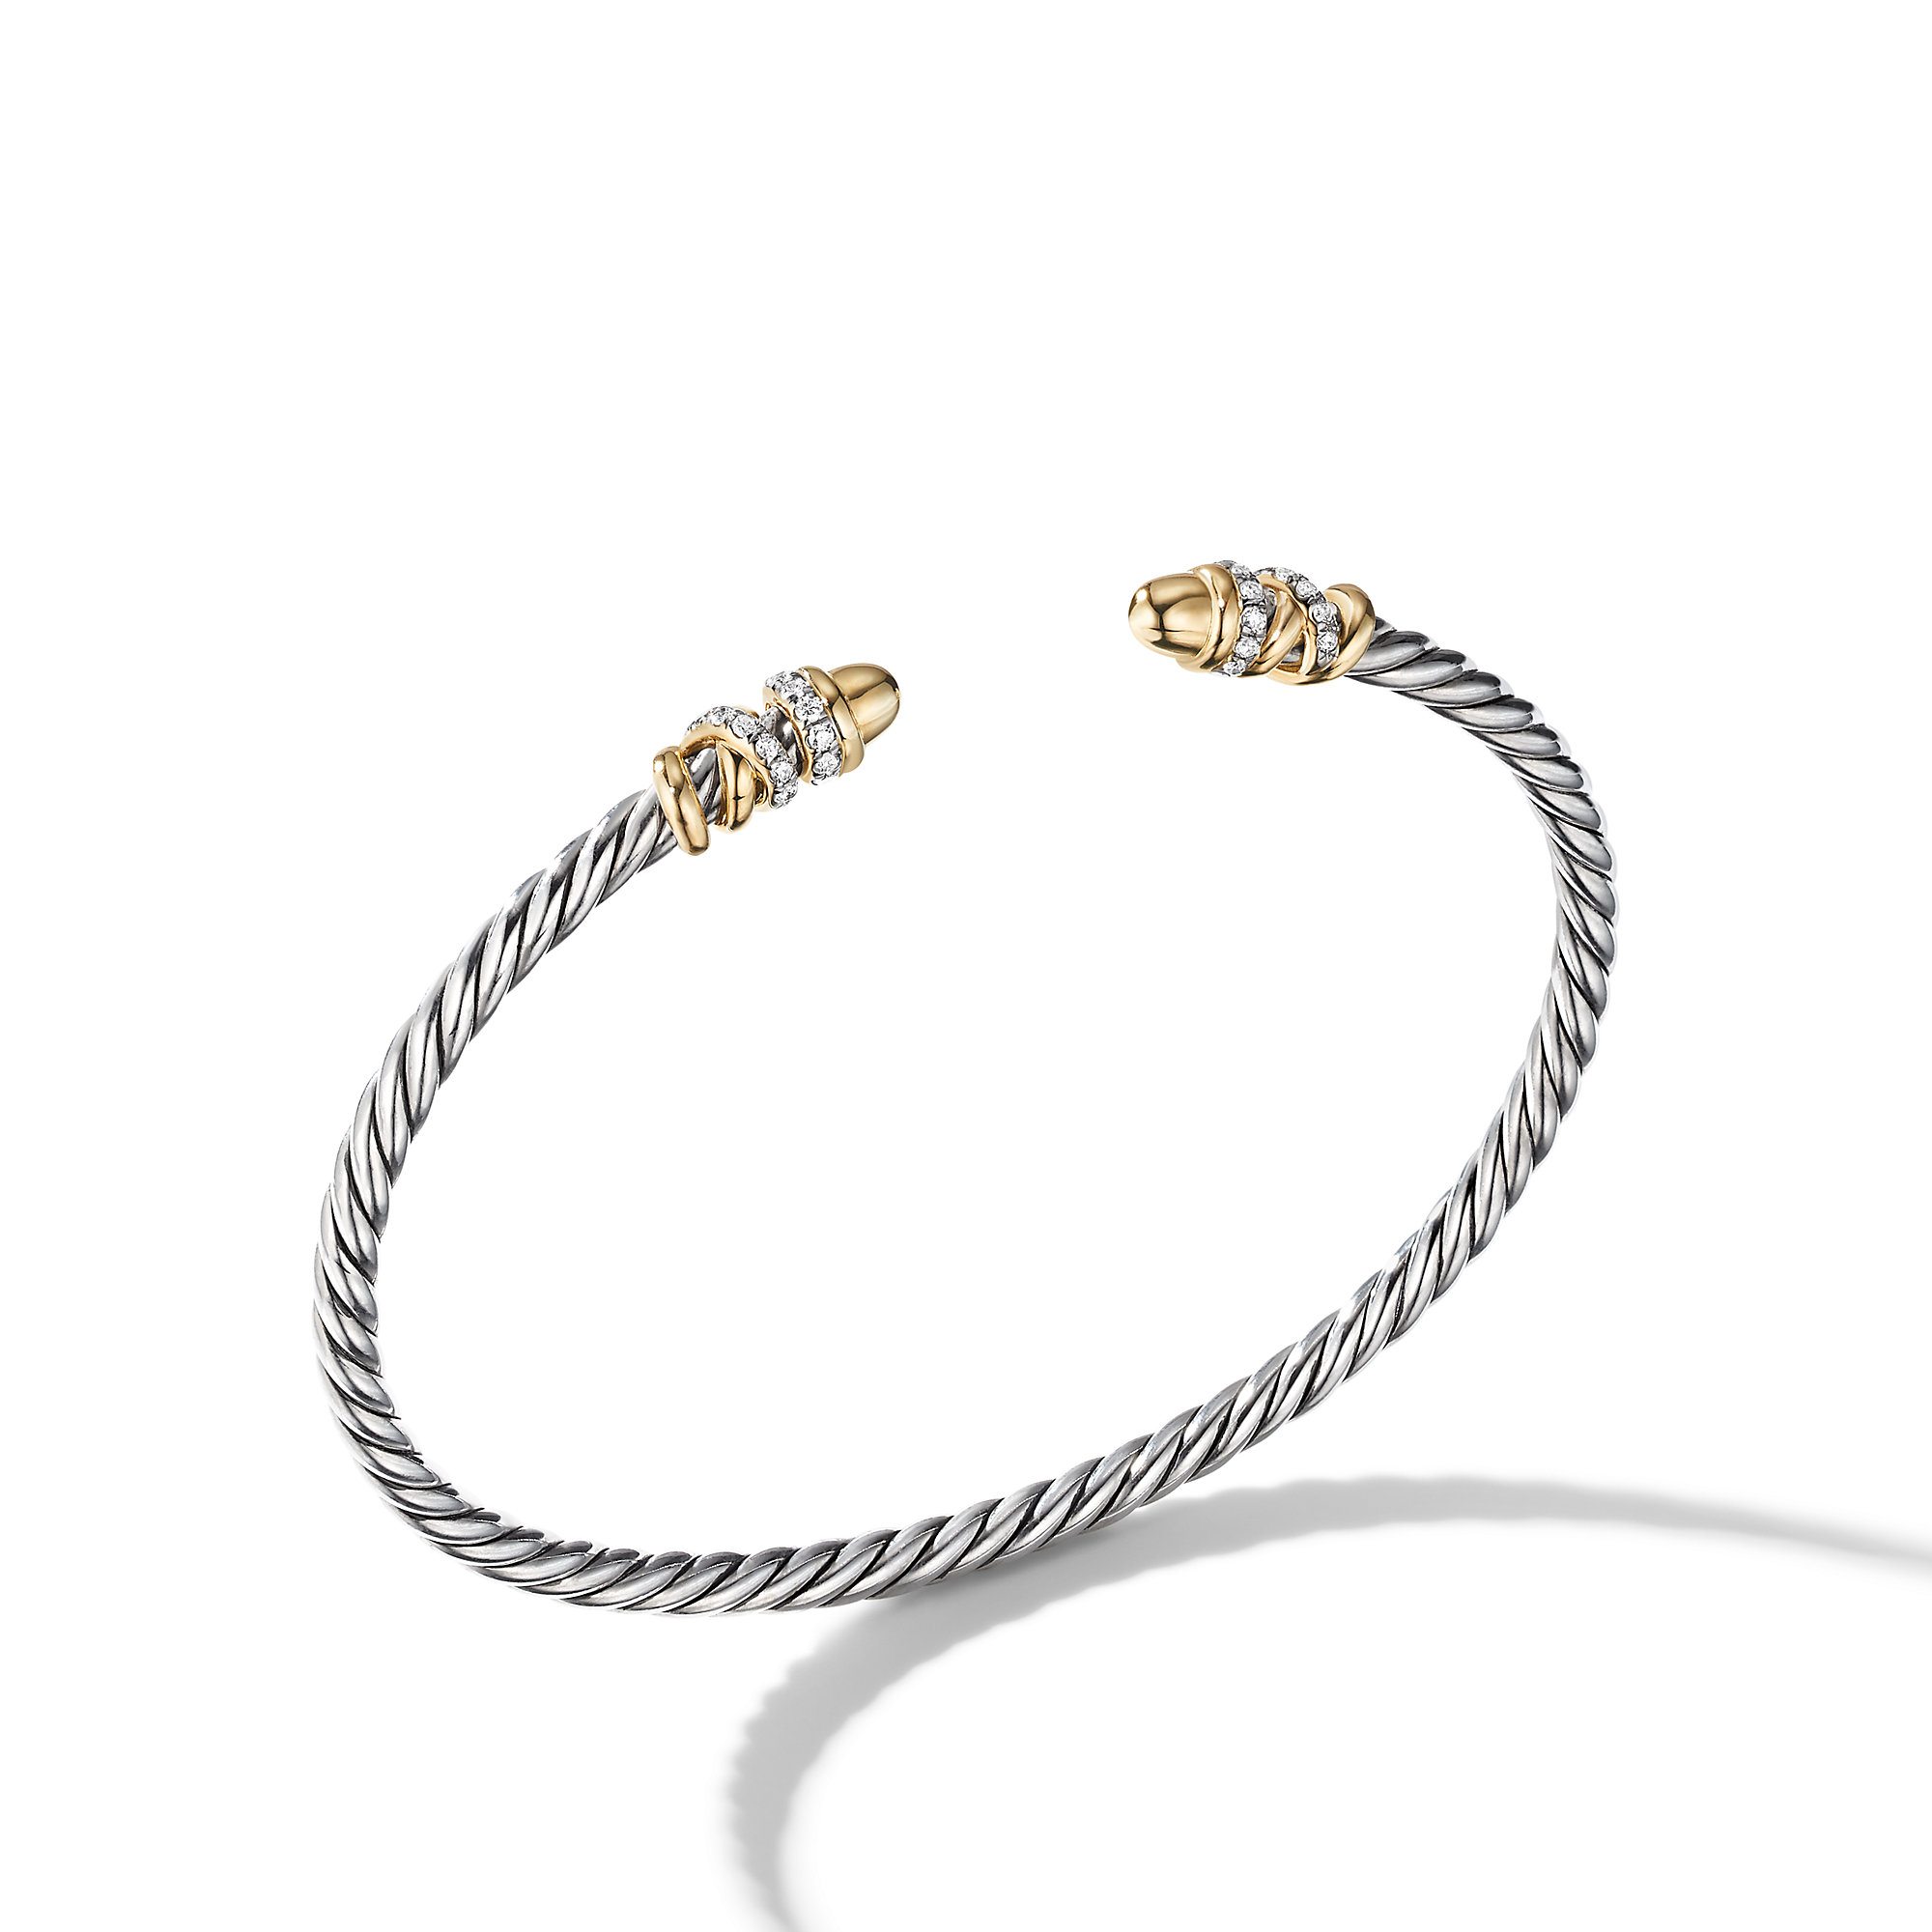 David Yurman | Petite Helena Open Bracelet with Pearls, 18K Yellow Gold and Diamonds | Side View